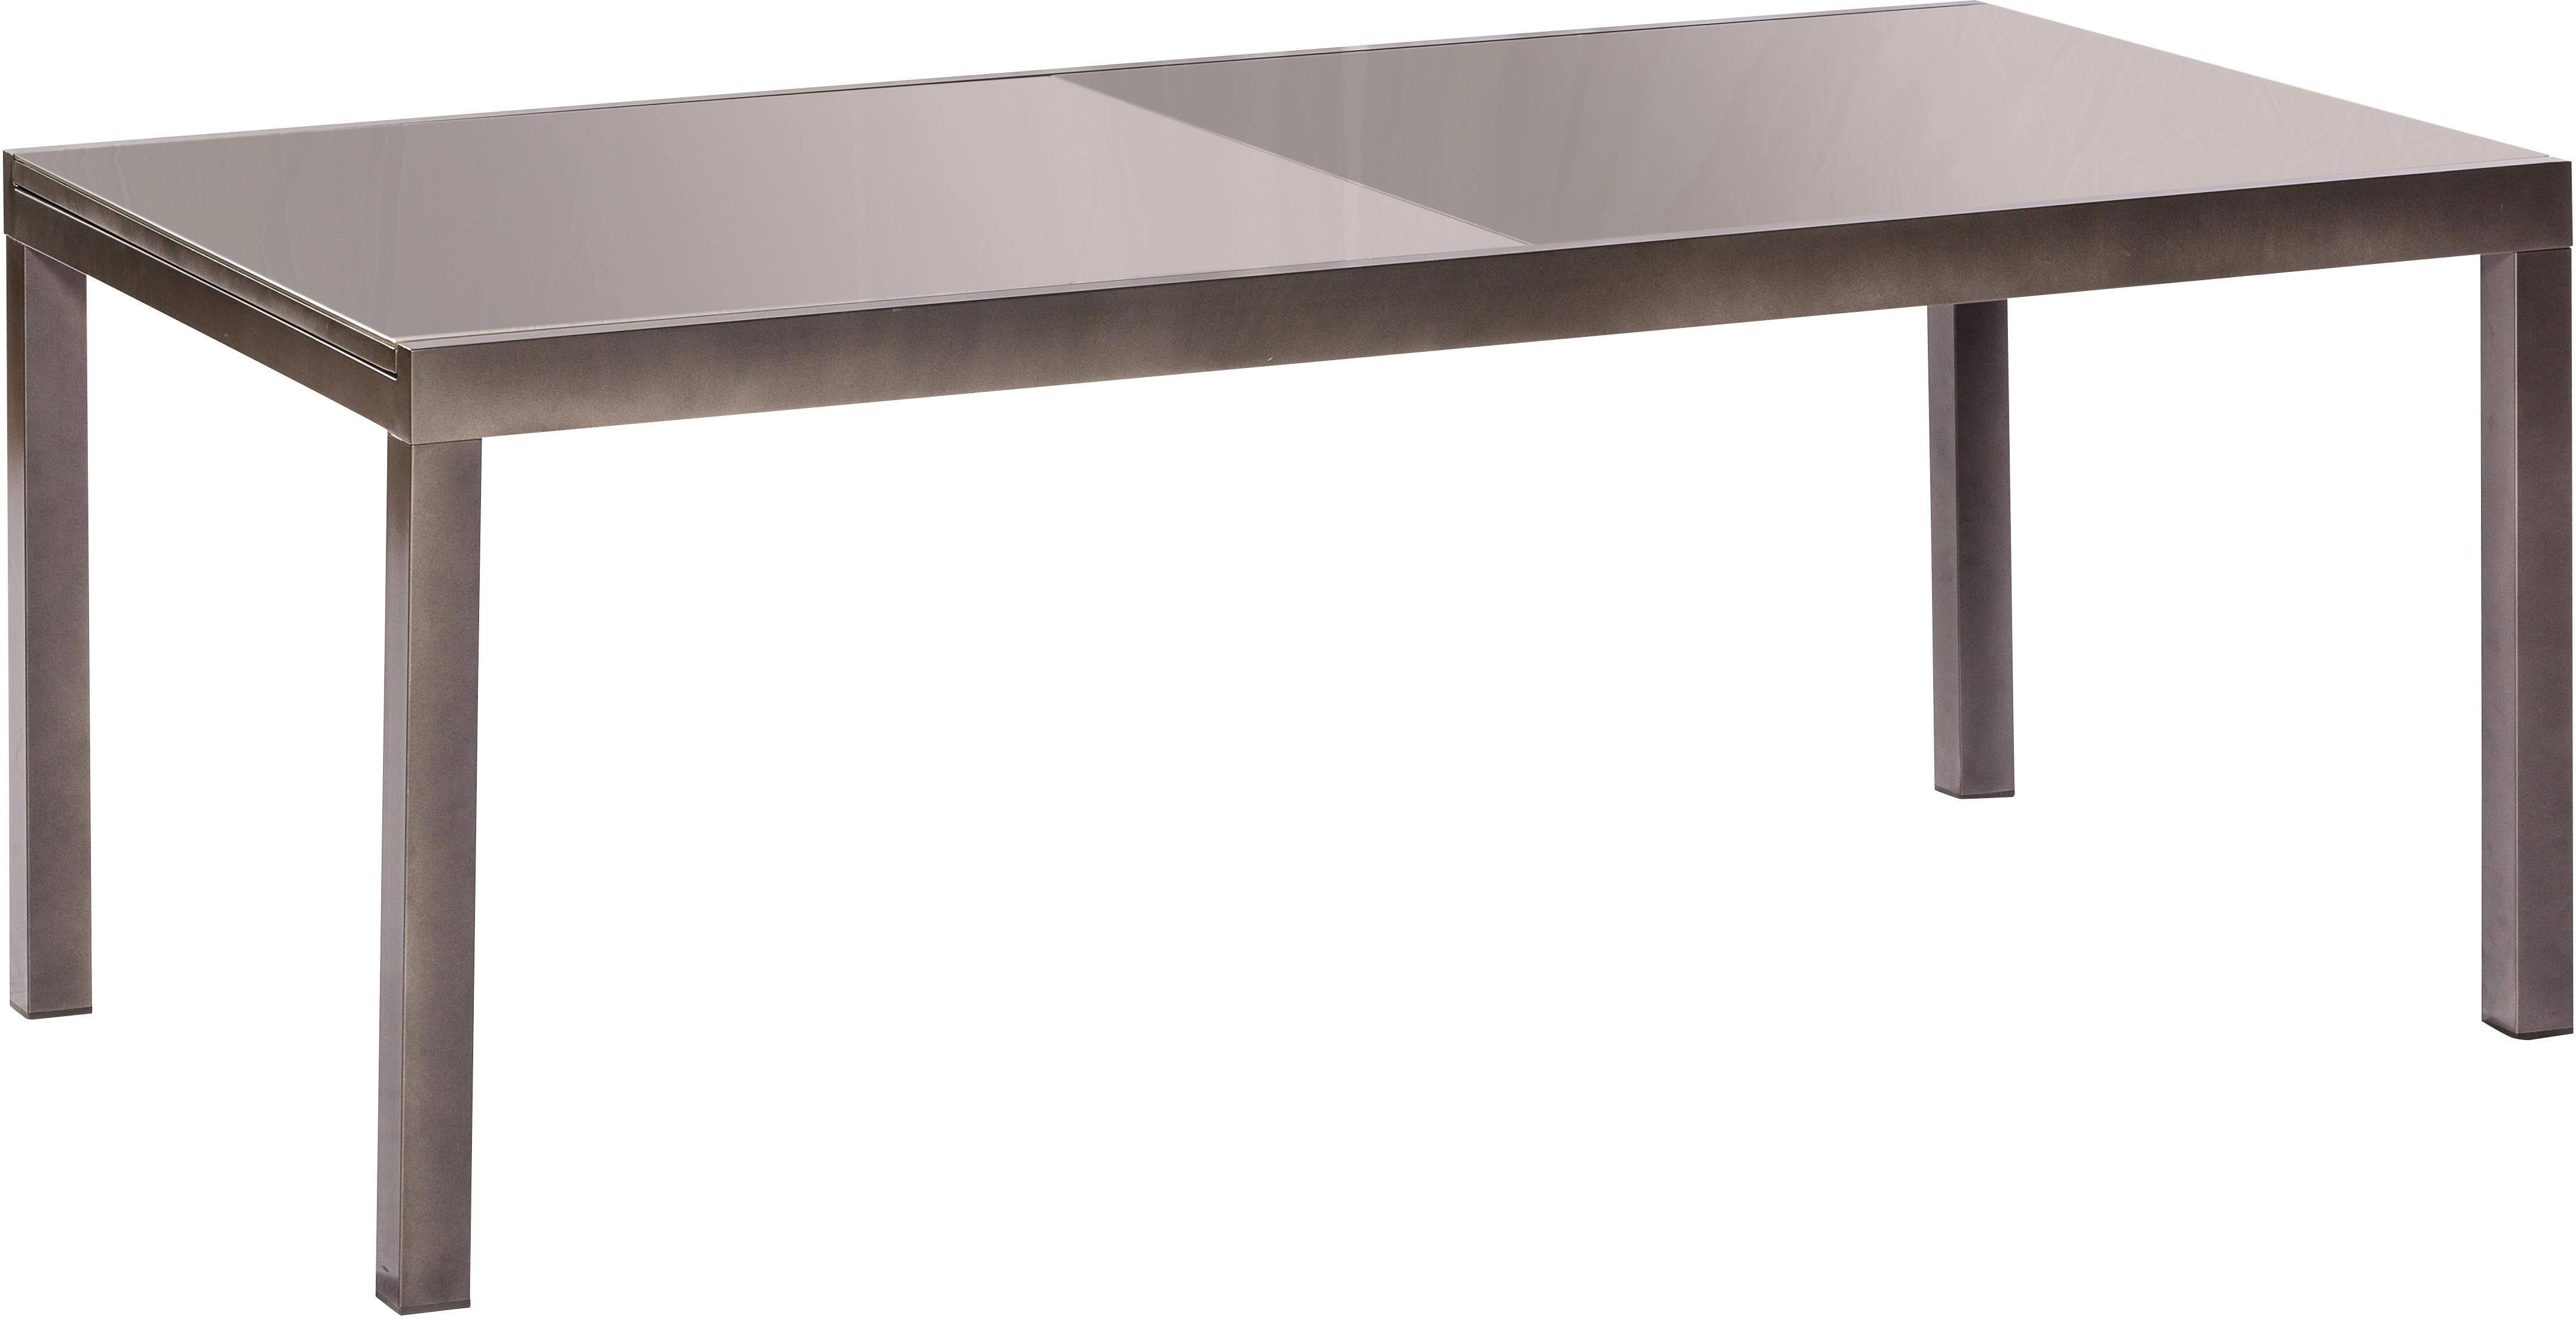 Semi OBI cm 200/300 Gartentisch x bei Ausziehbar Rechteckig cm kaufen 110 Grau Aluminium Merxx